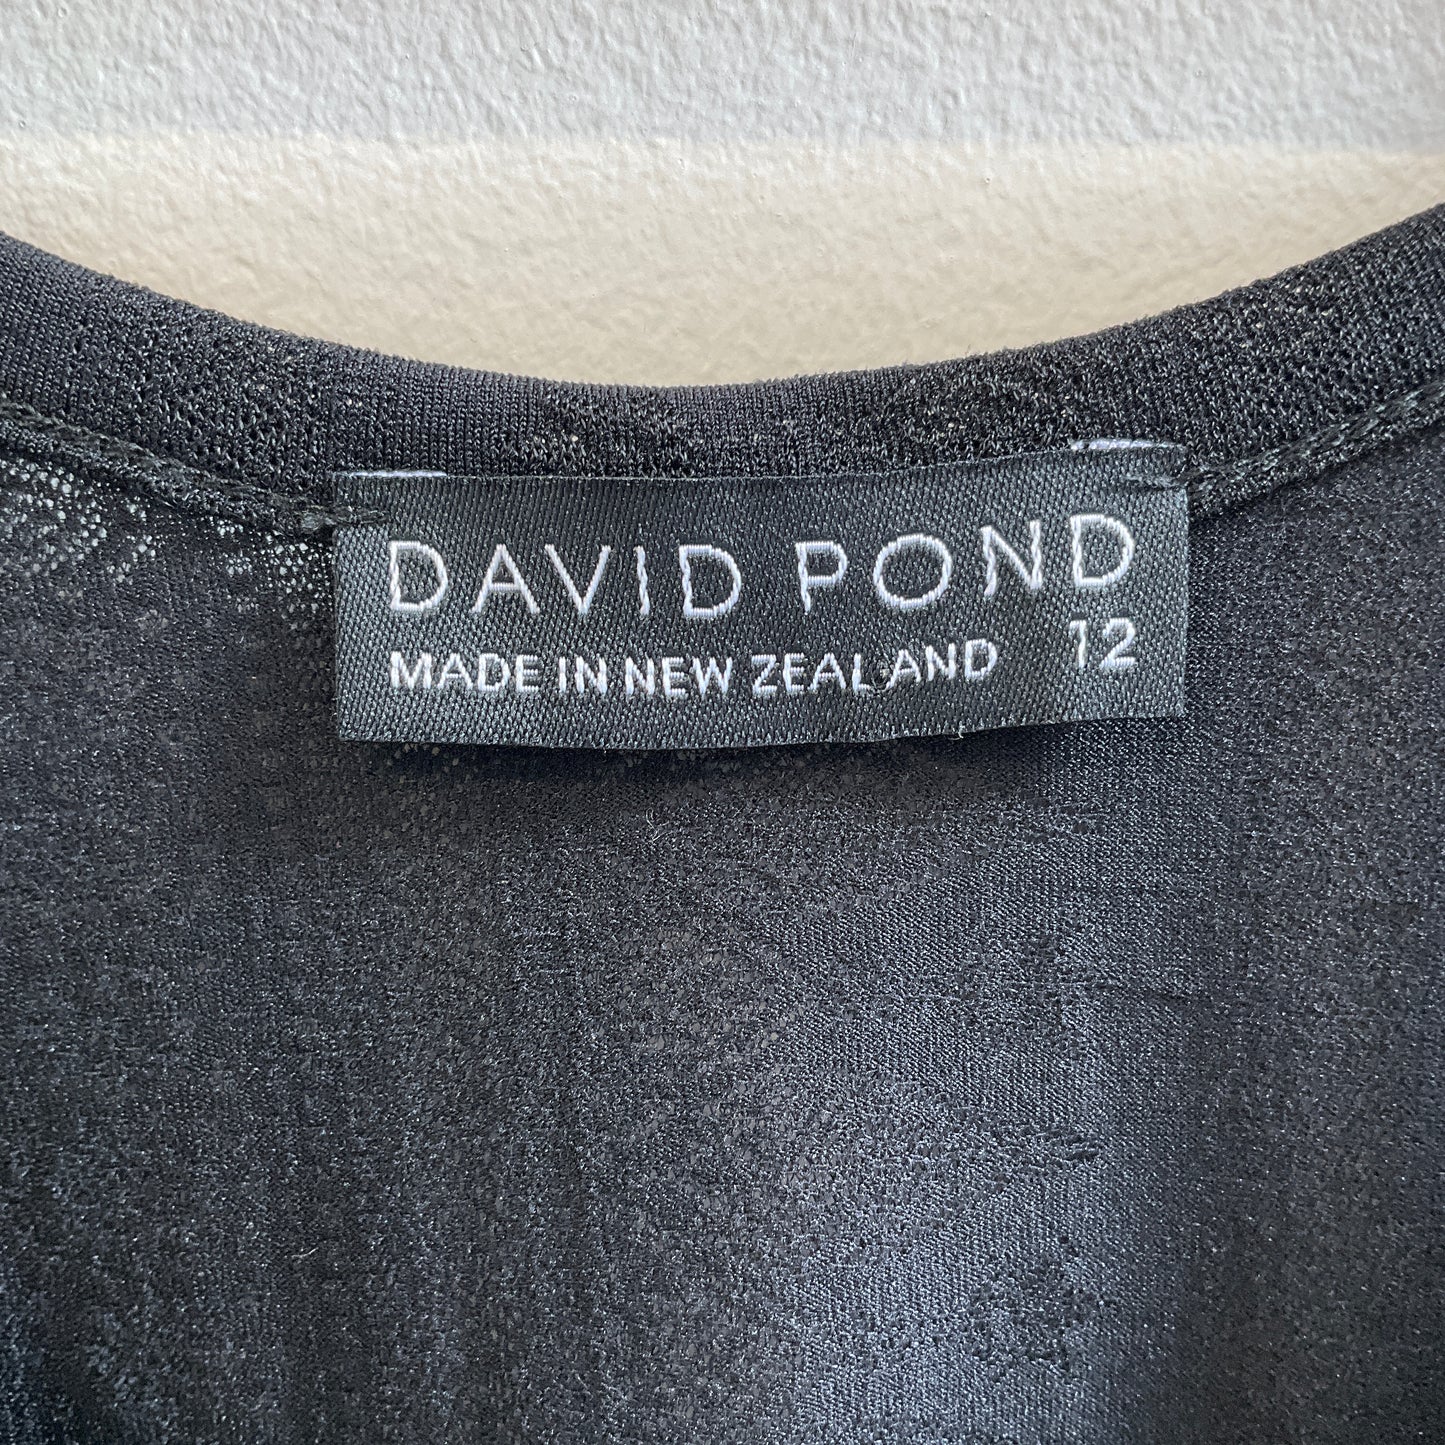 David Pond - Tunic Top